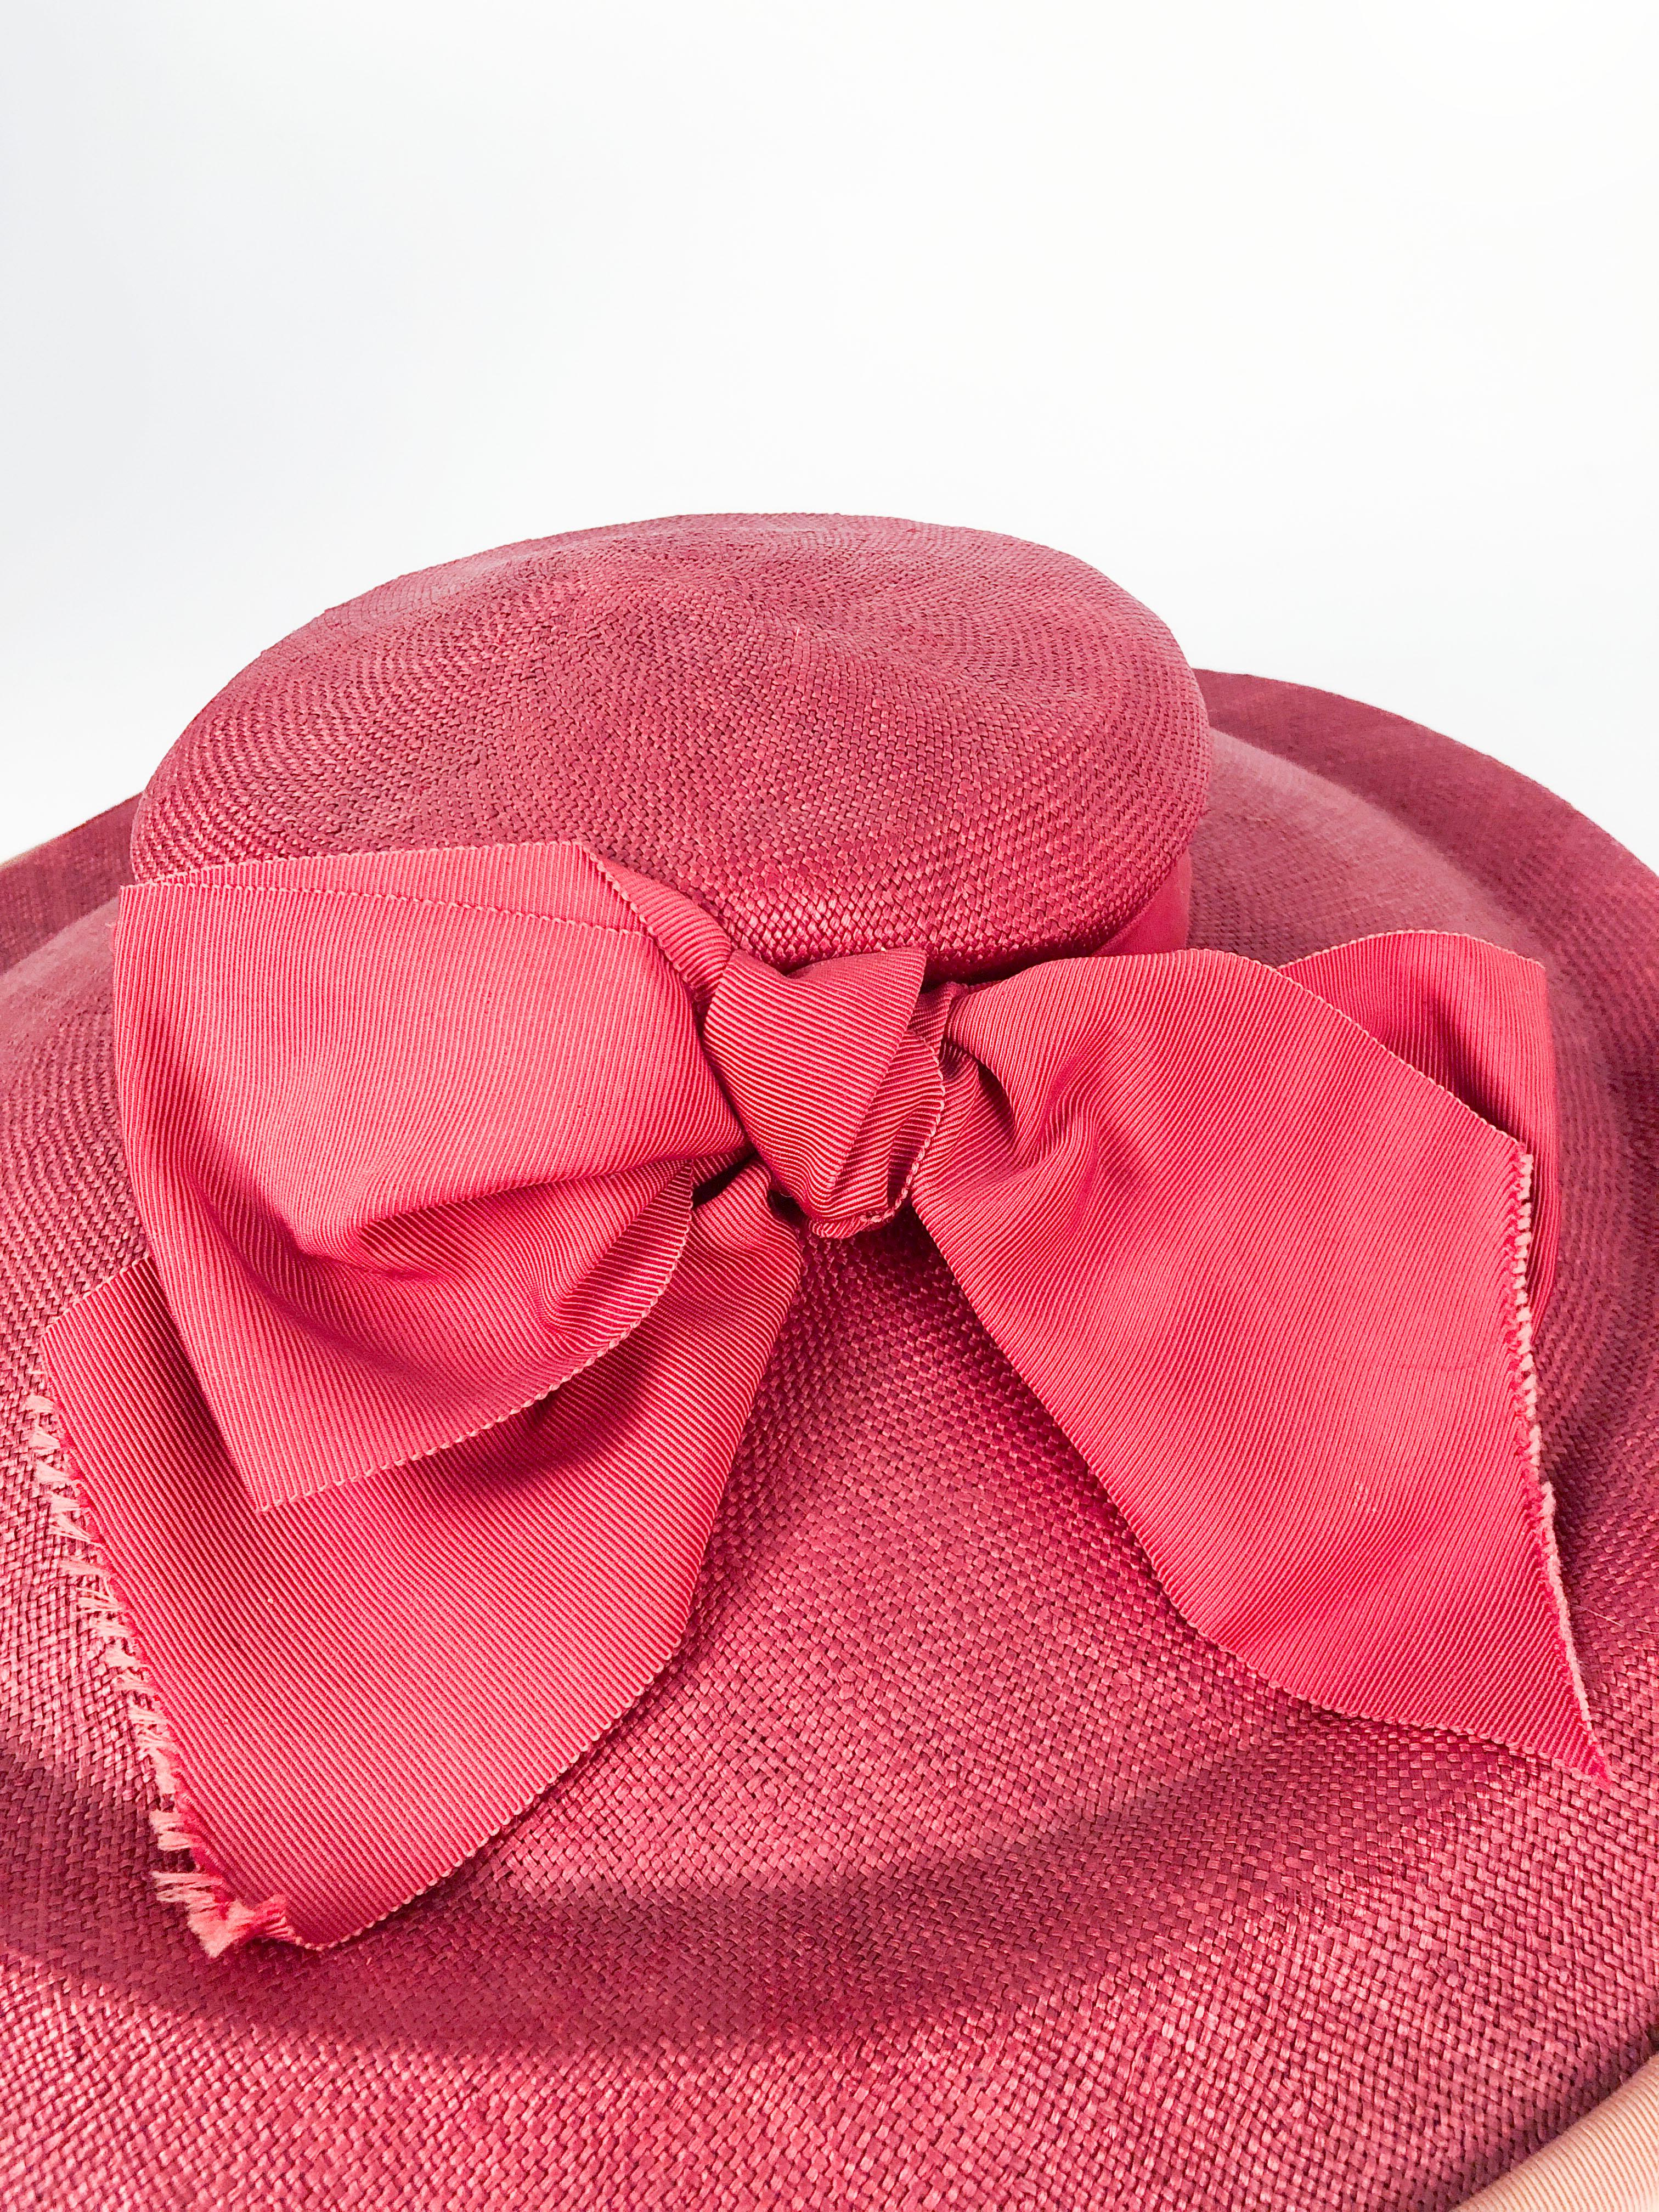 Women's or Men's 1940s Bullocks Coral Picture Hat